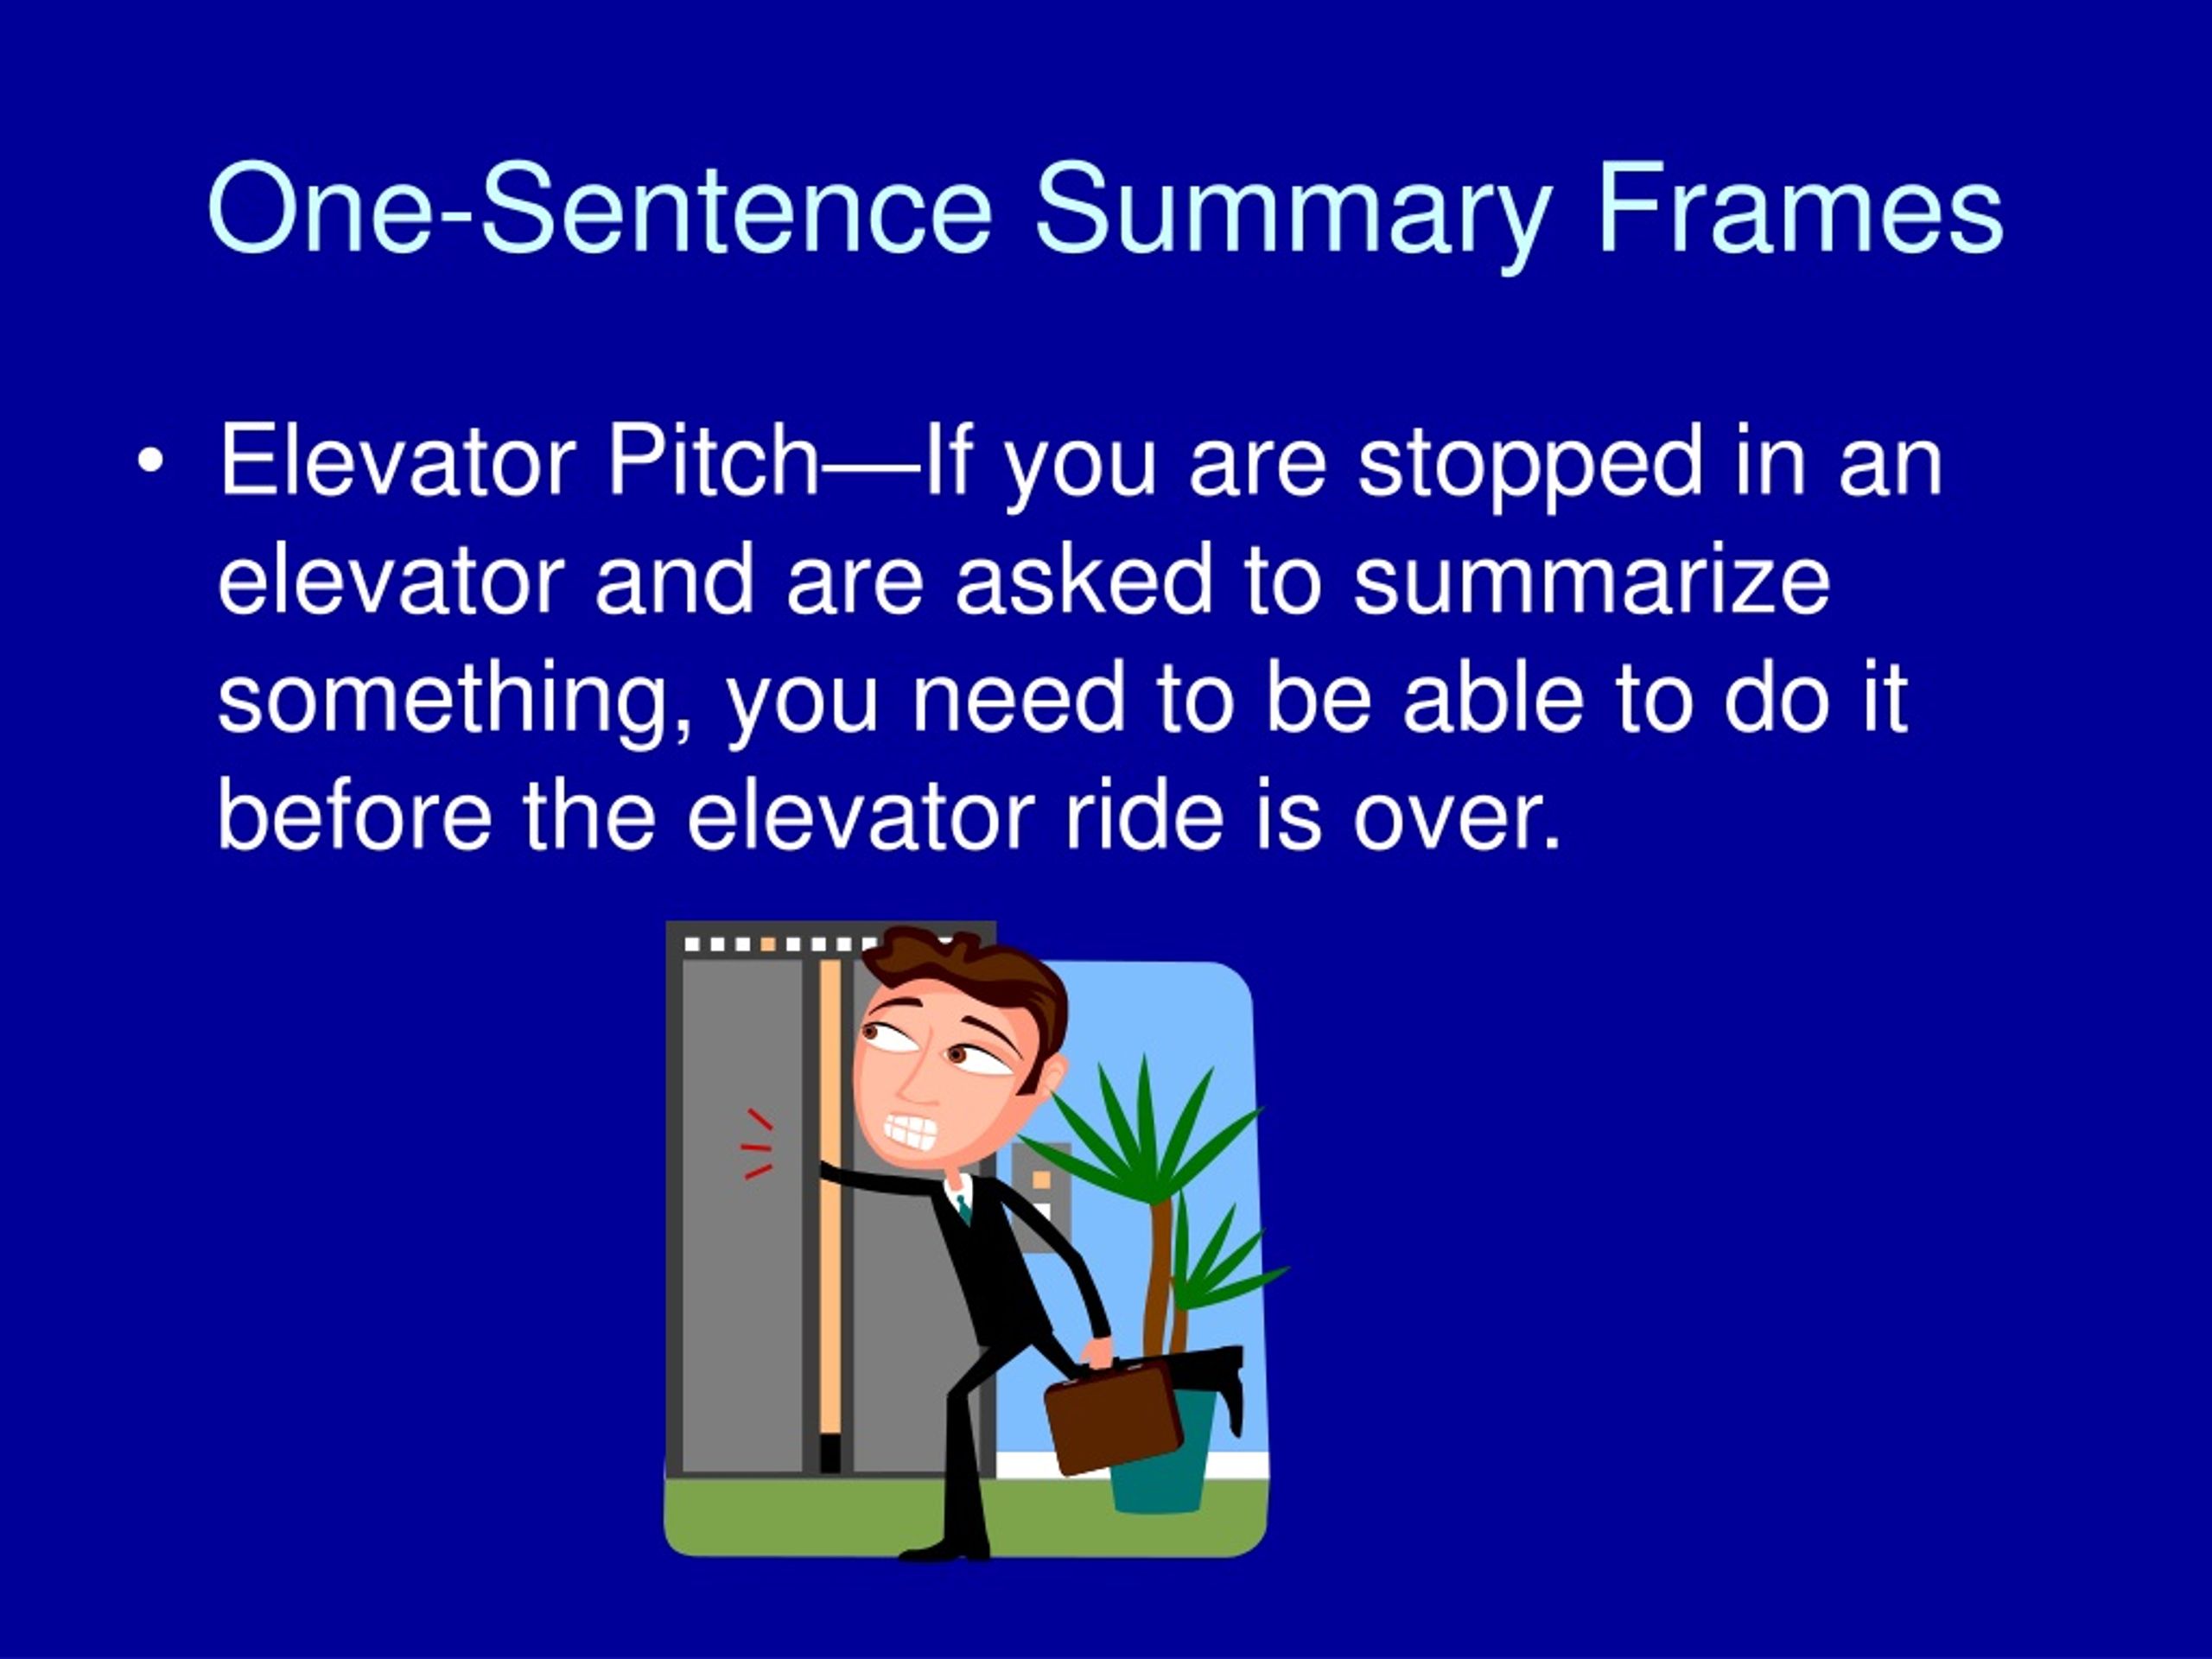 ppt-one-sentence-summaries-powerpoint-presentation-free-download